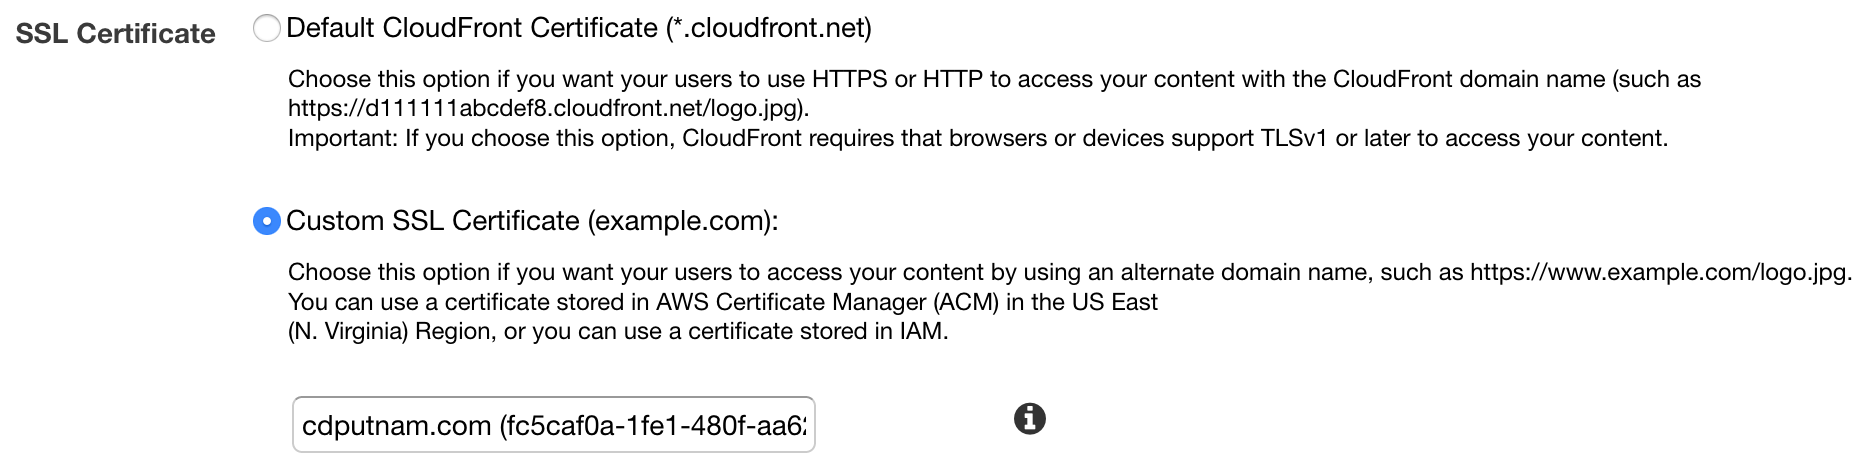 CloudFront SSL Certificate Option